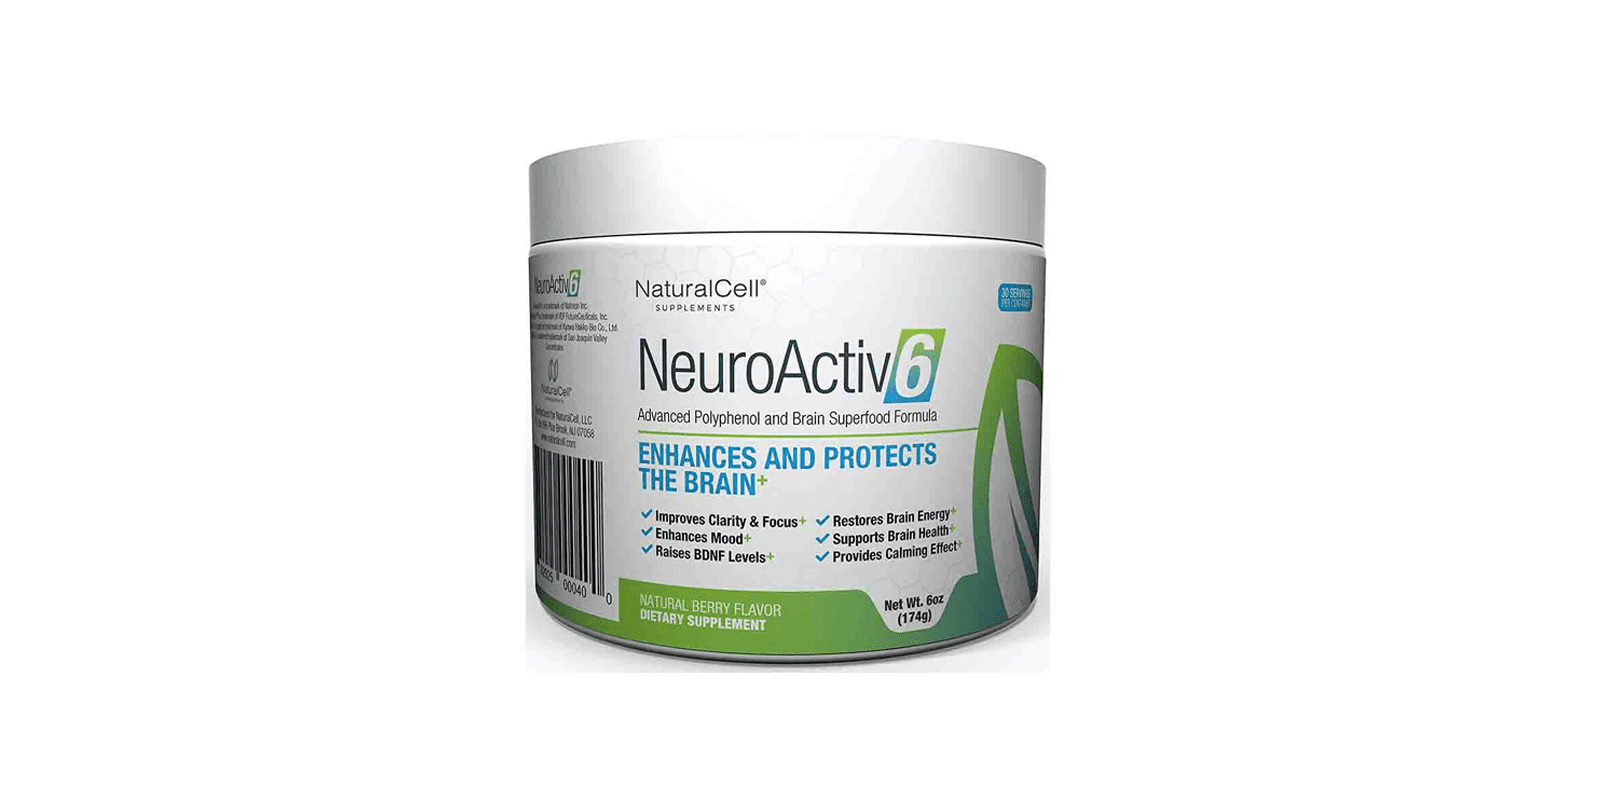 Neuro Active reviews